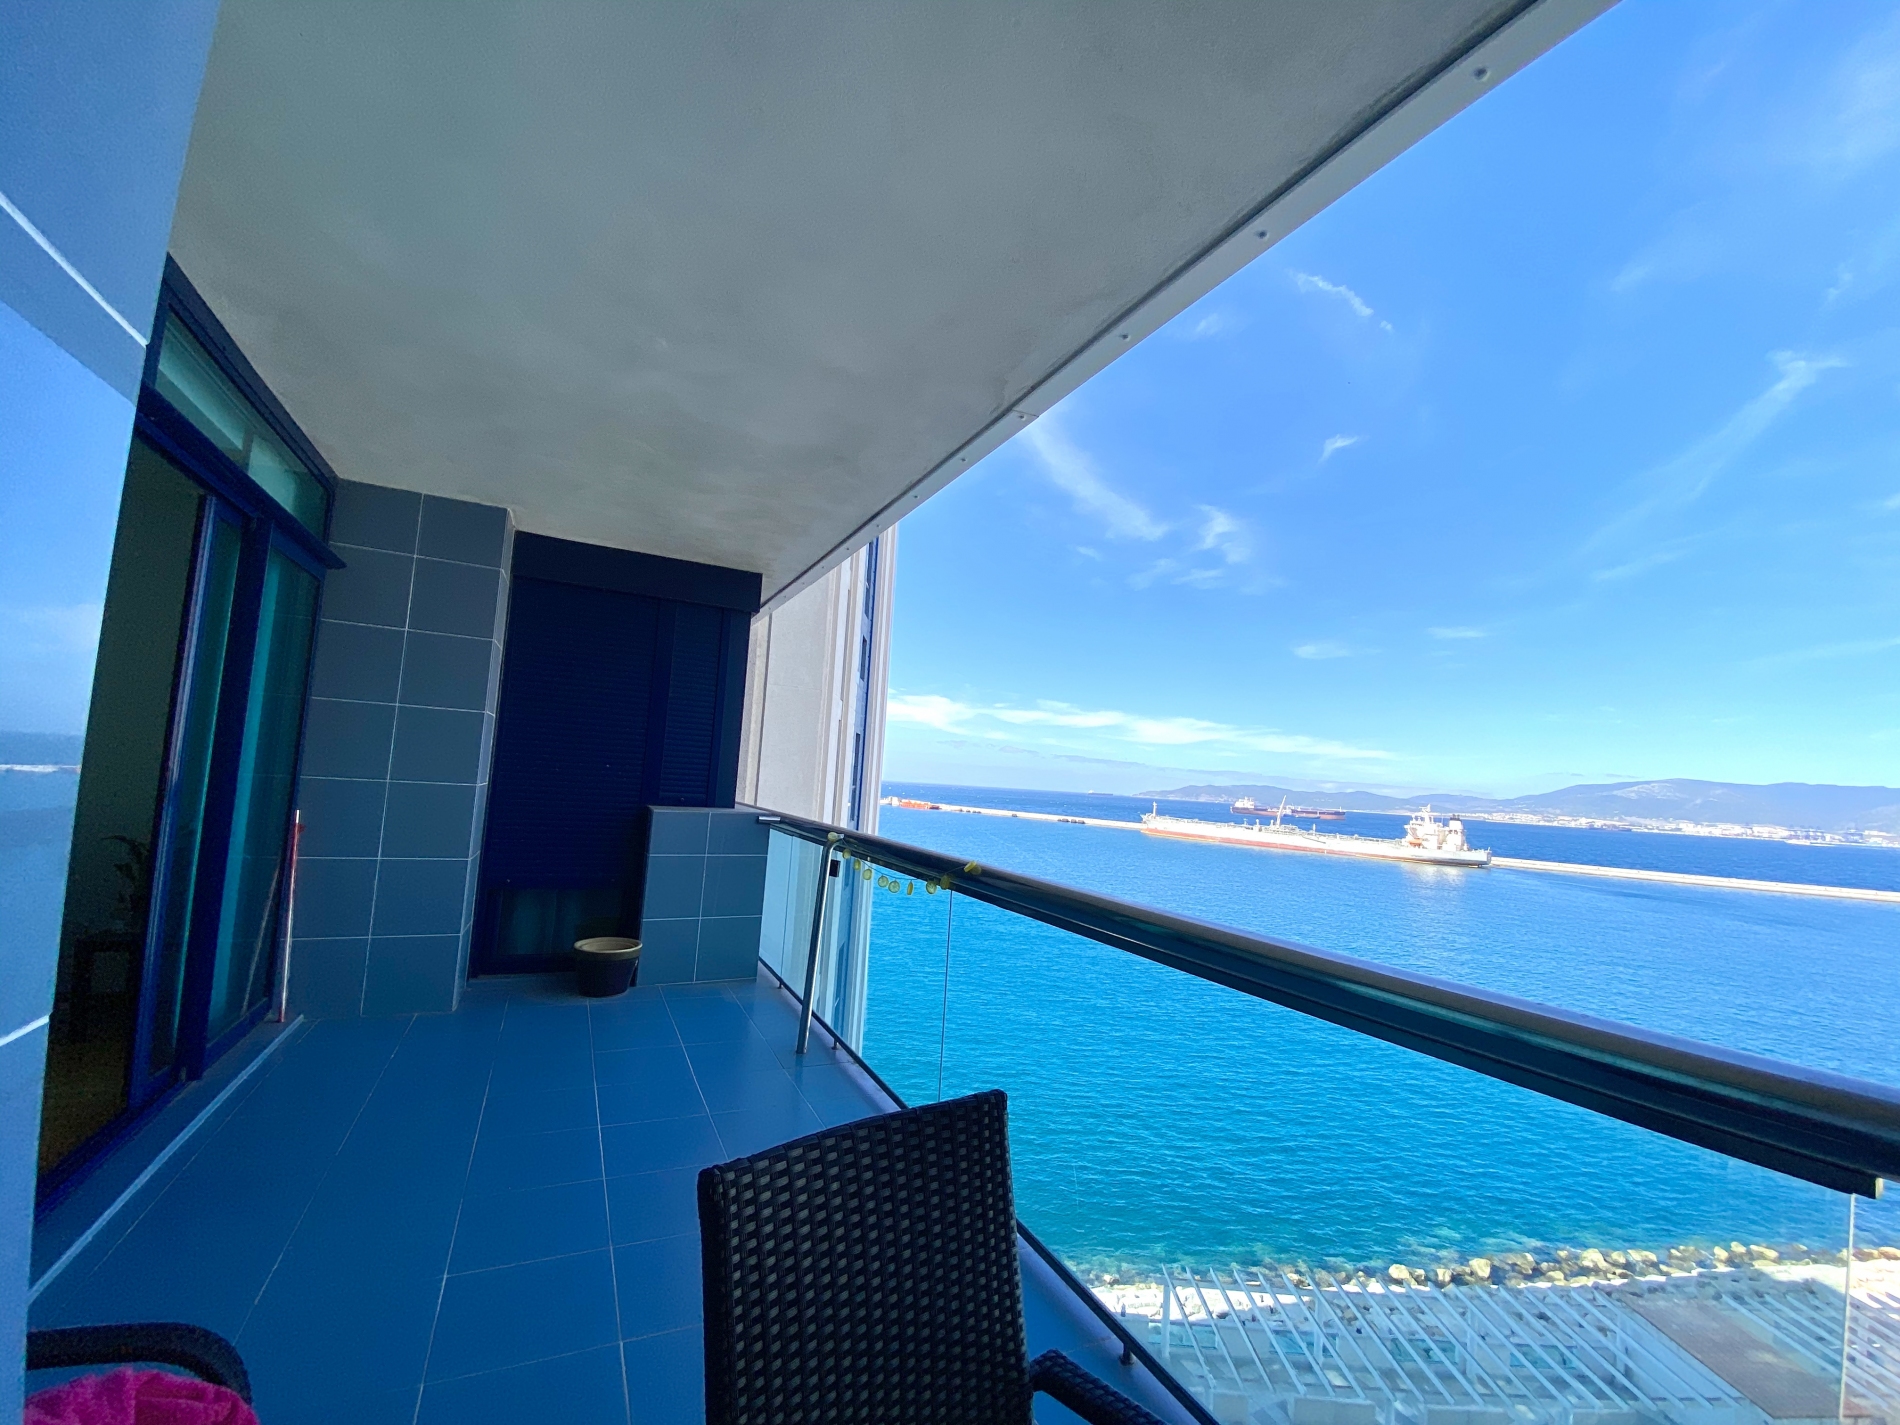 3 Bedroom Apartment For Rental In Europlaza Gibraltar